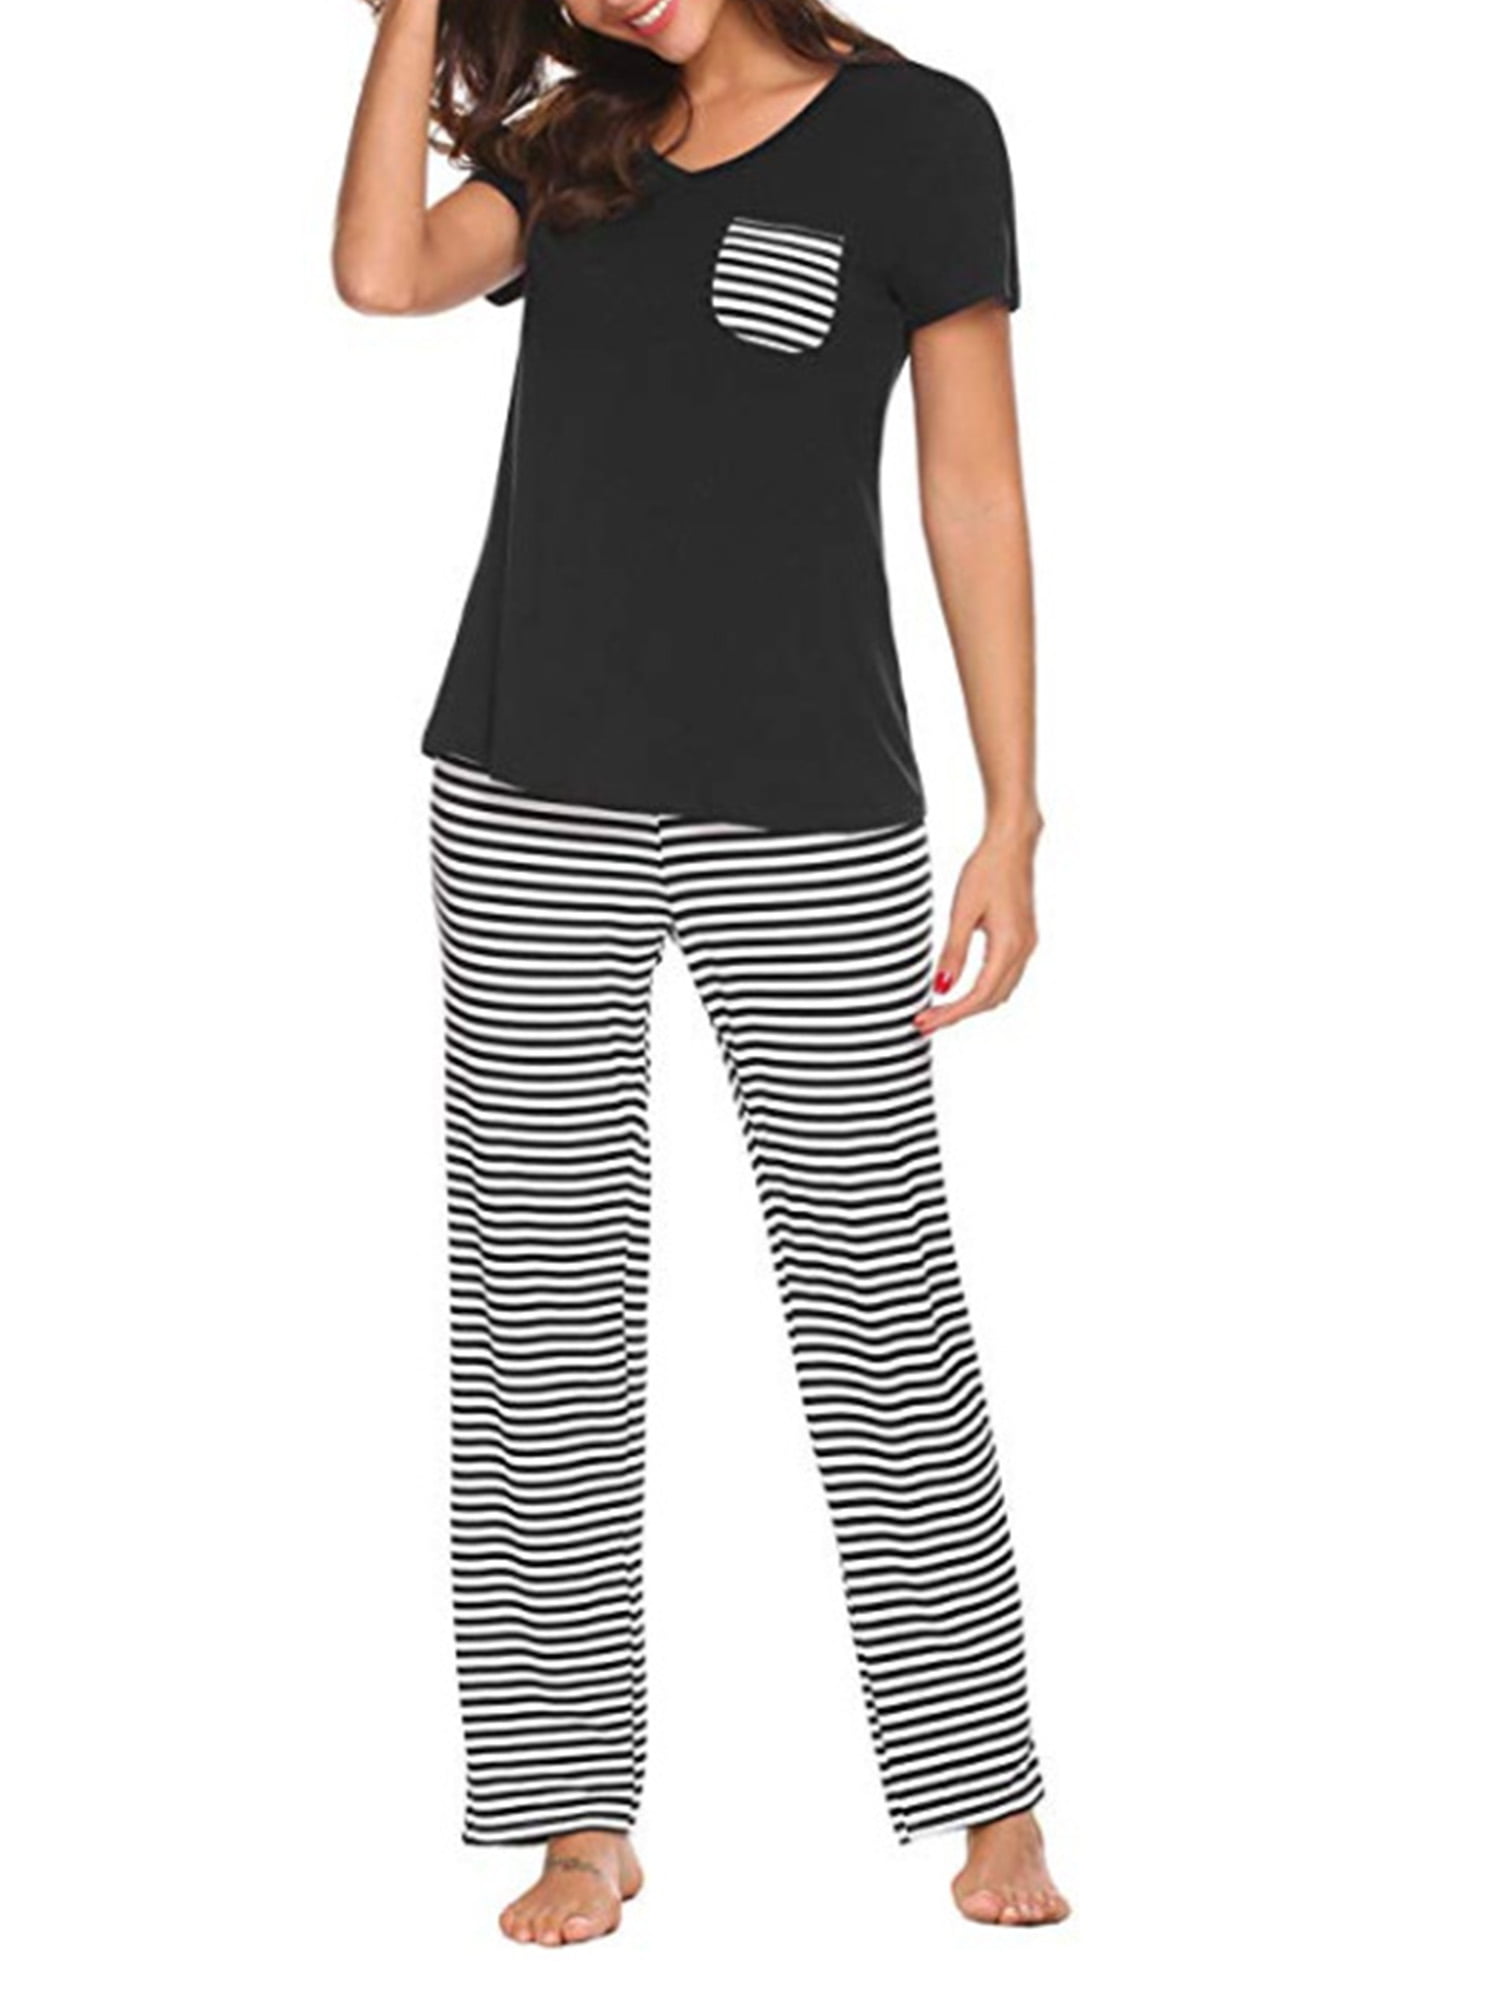 Ladies Striped Pyjamas Set Womens 100% Cotton Long Sleeved Floral Top PJ Bottoms 